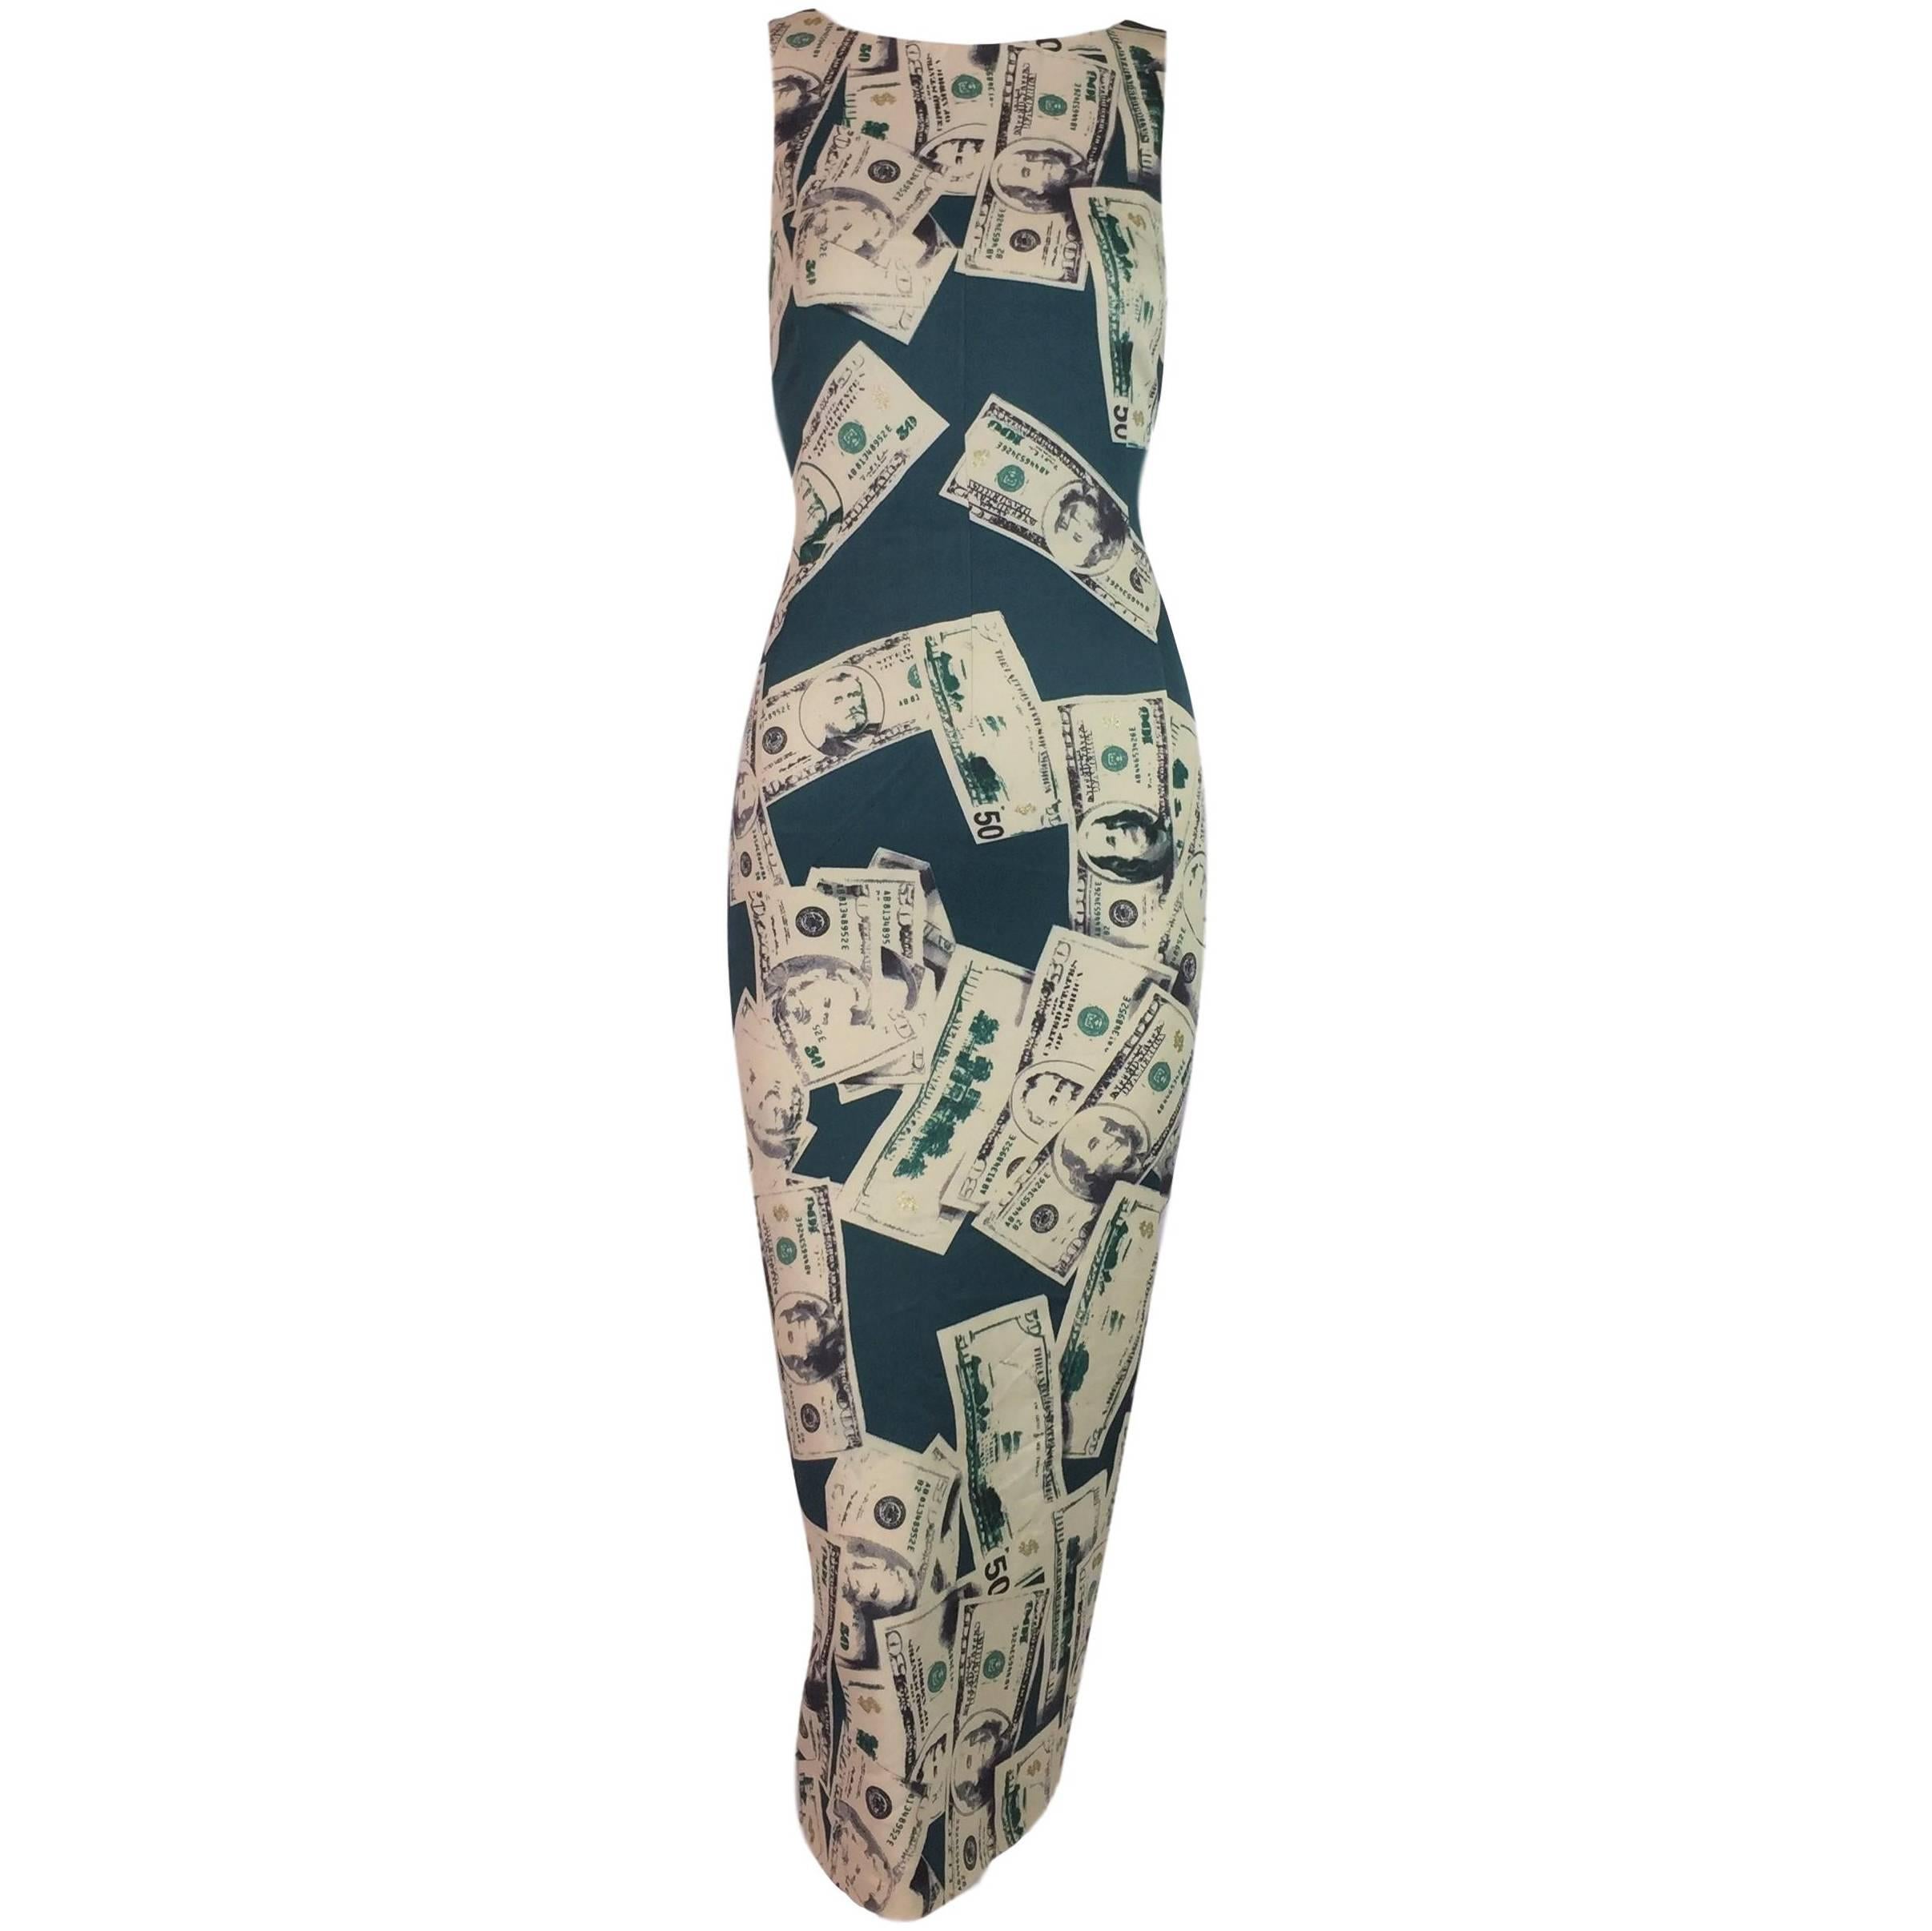 D&G by Dolce & Gabbana Limited Edition $100 Dollar Bills Dress, S / S 2001 